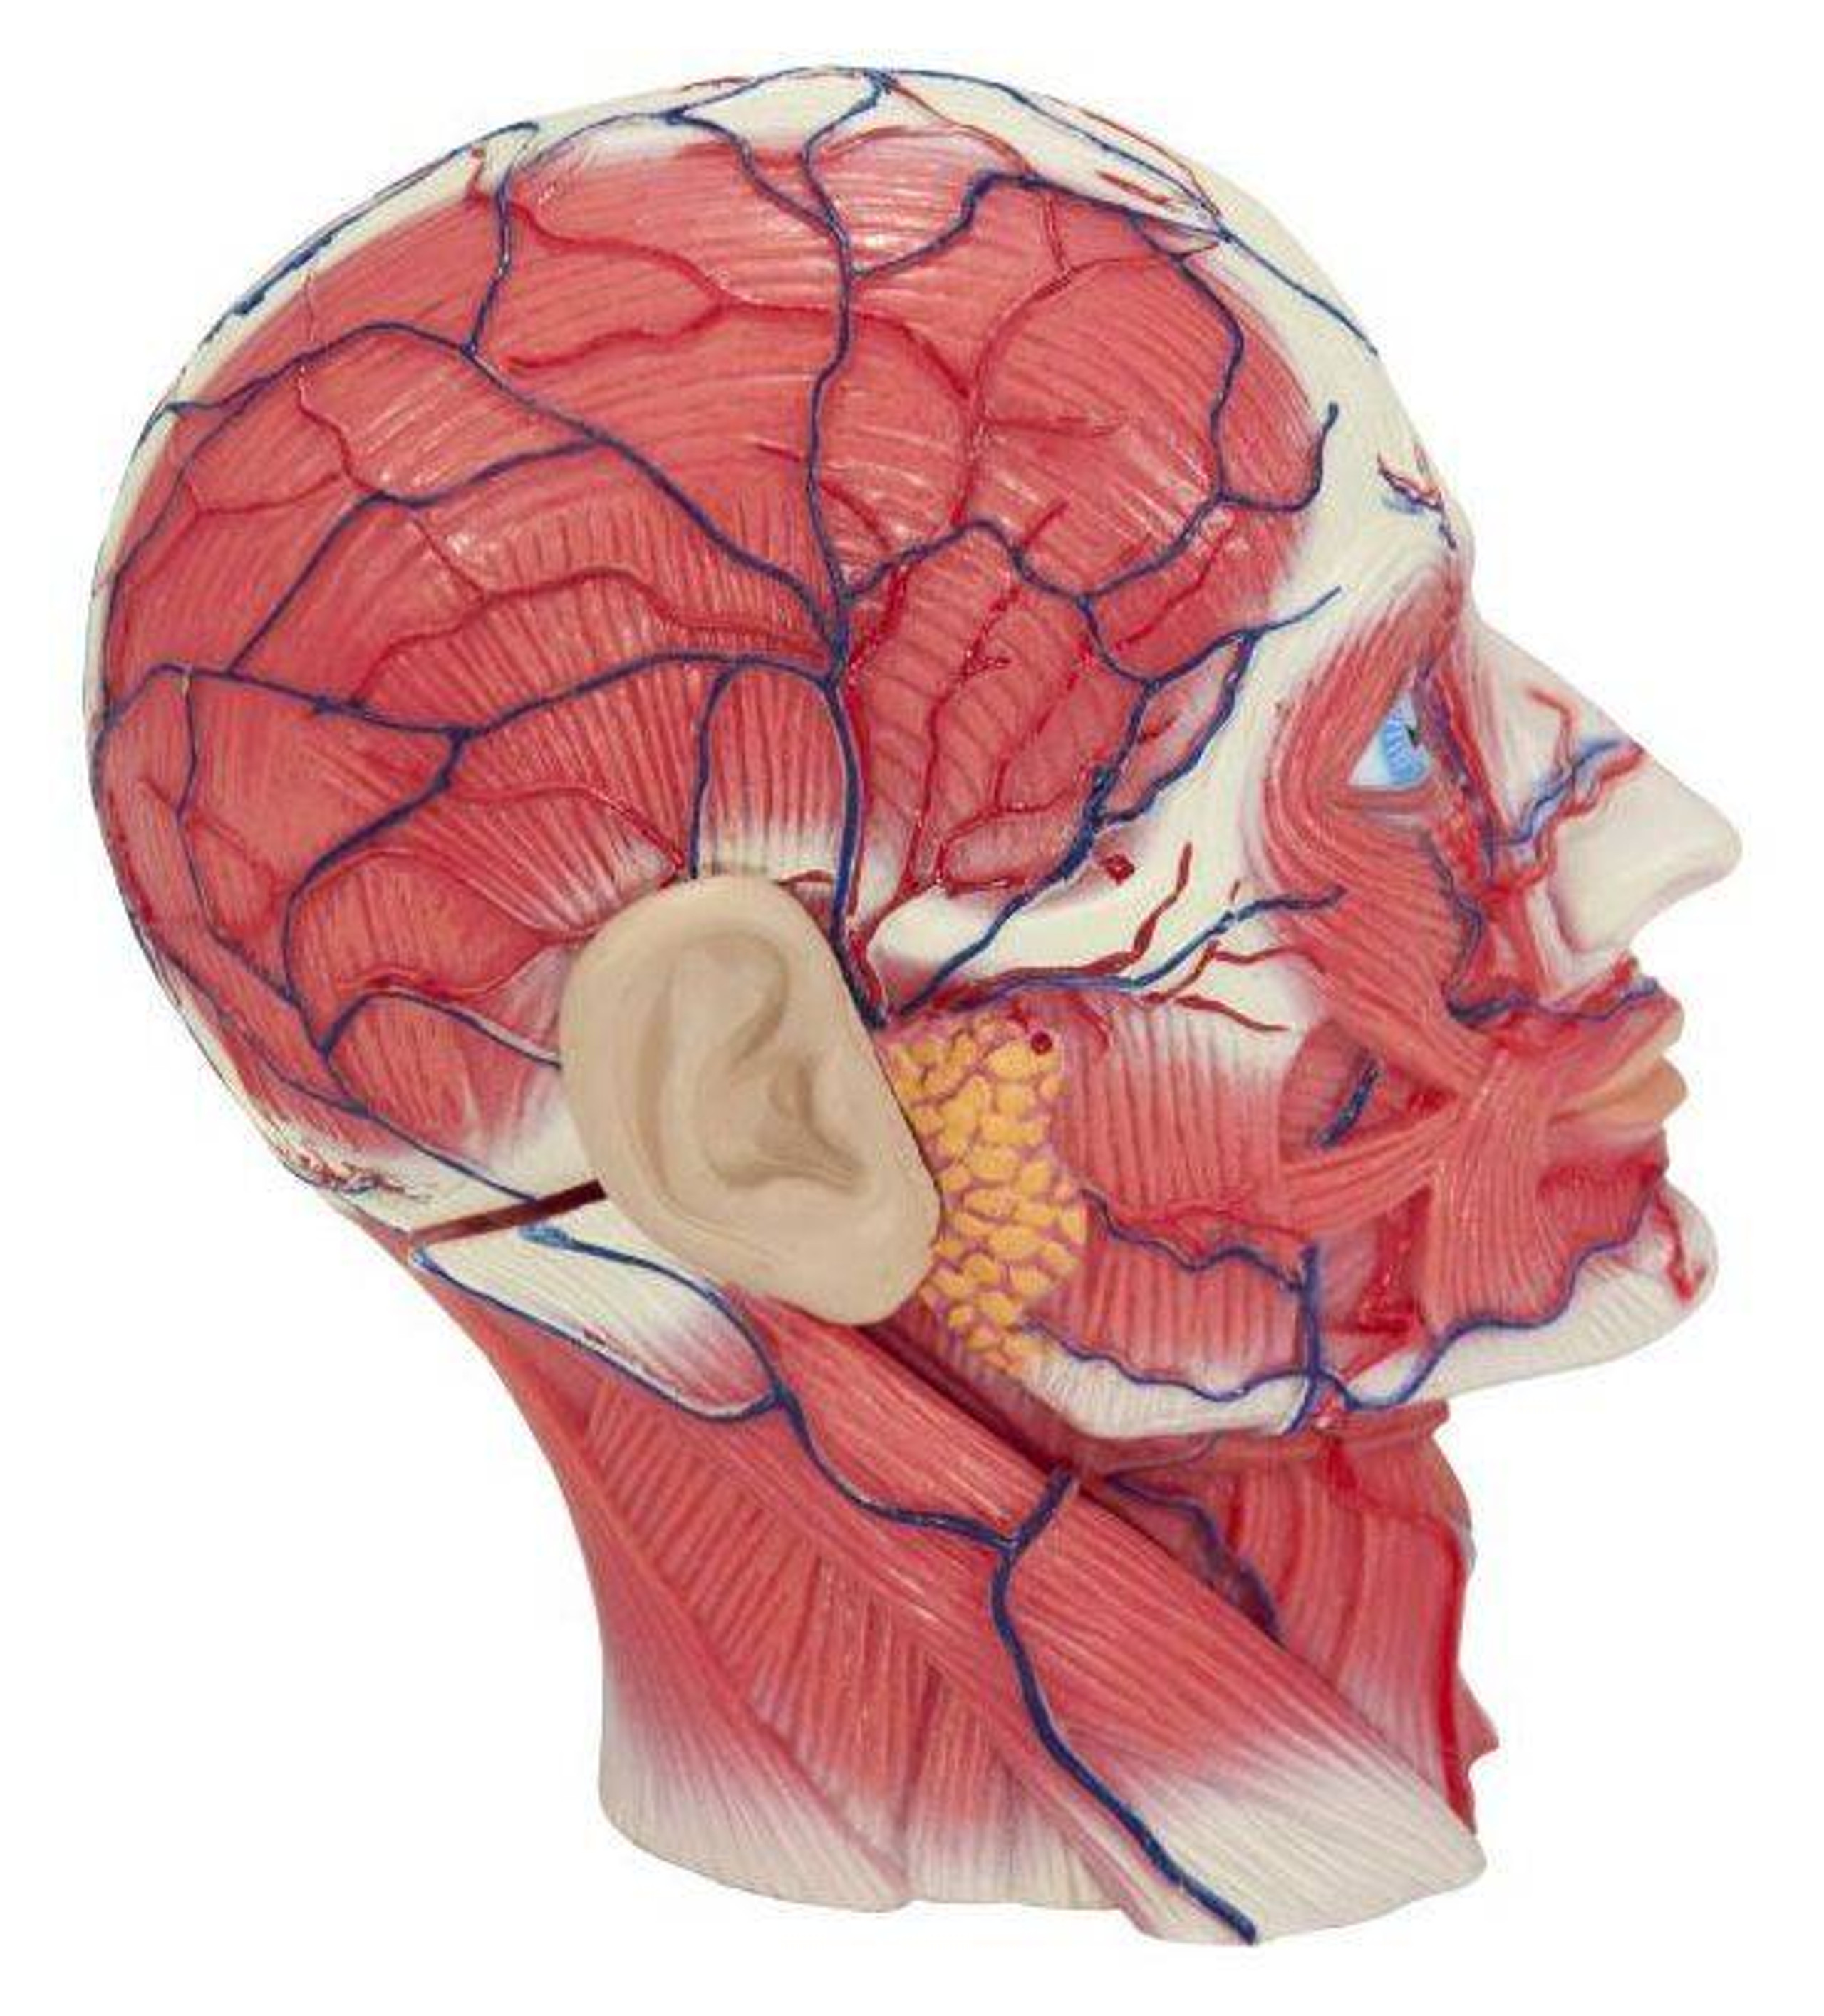 Anatomy Model Head Human